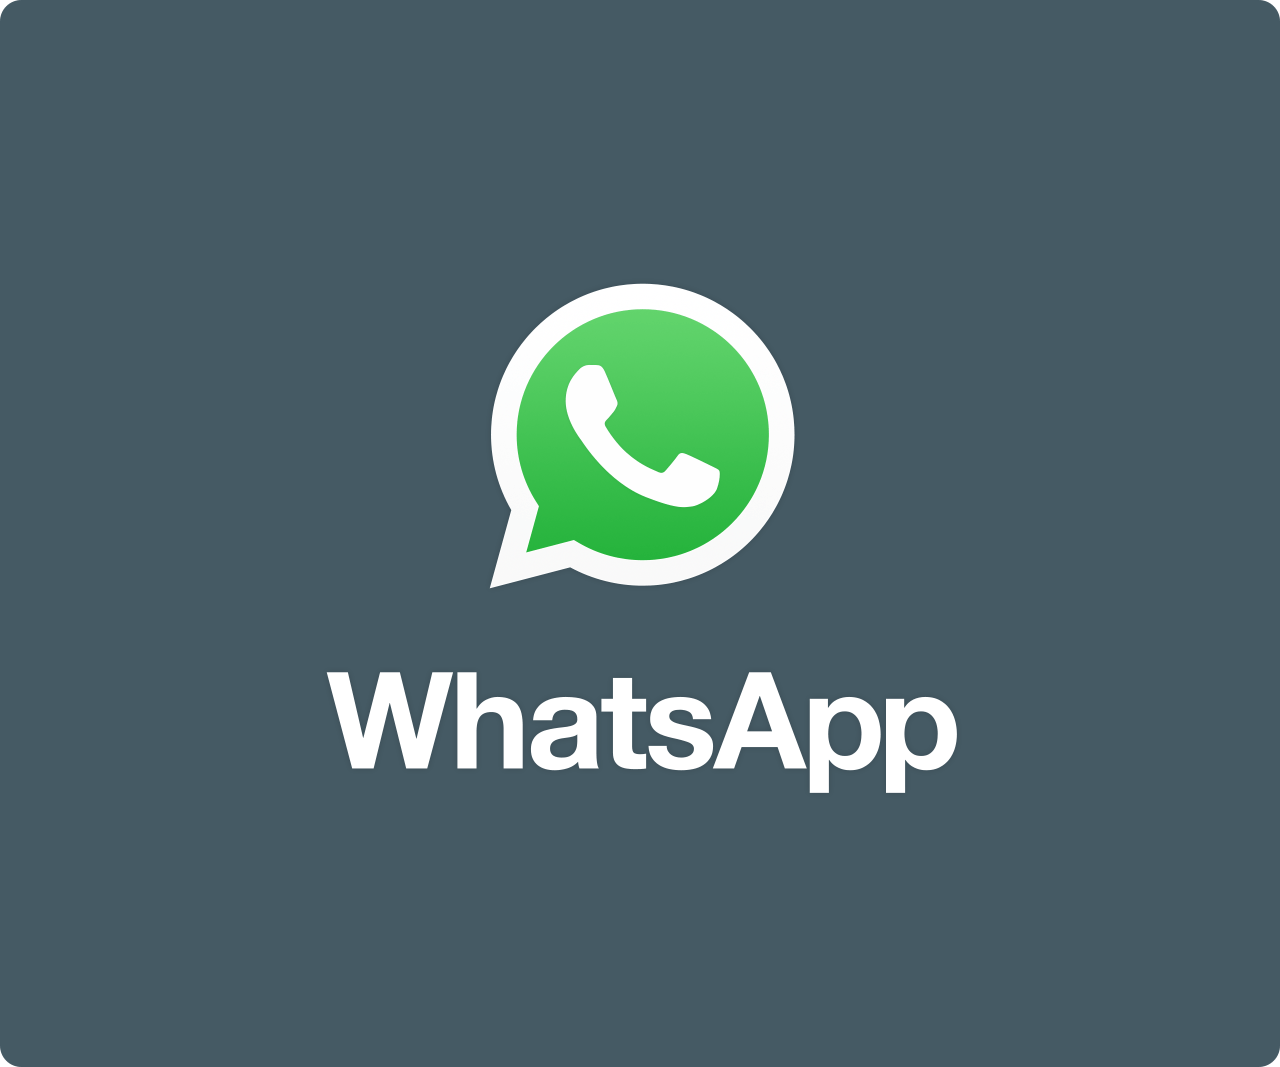 General Mobile App Logo - WhatsApp Brand Resources